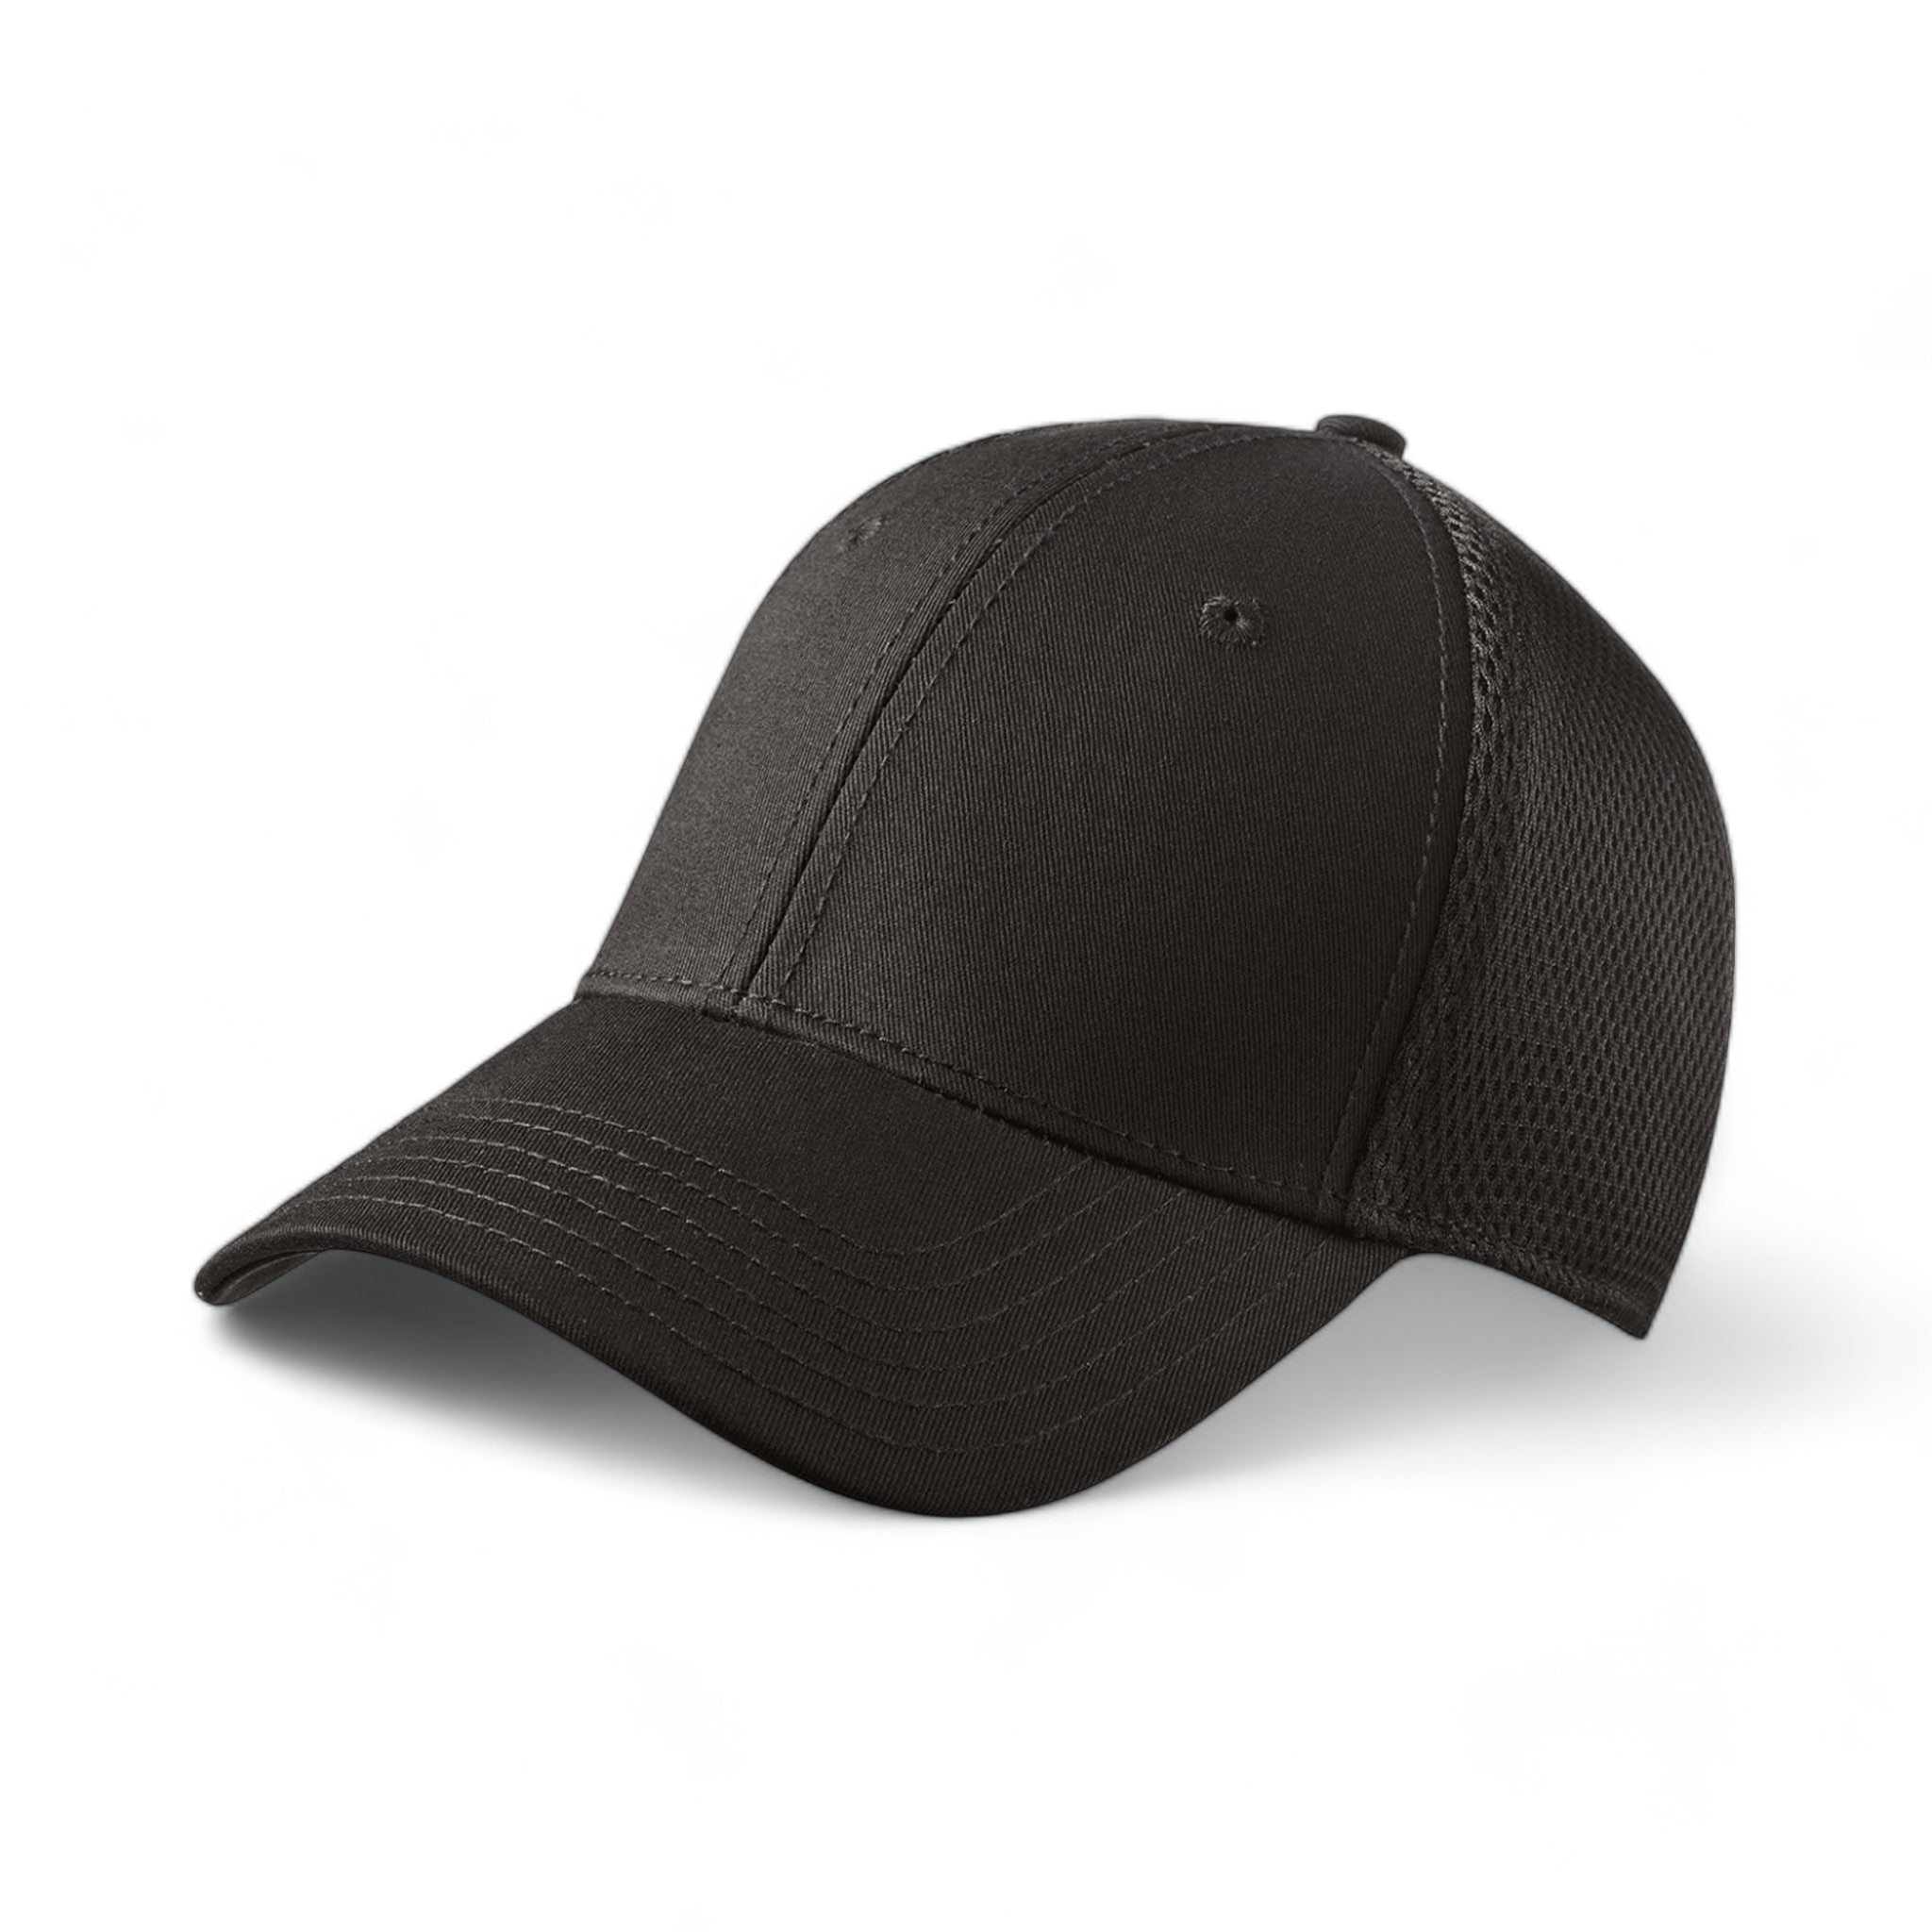 Side view of New Era NE1020 custom hat in black